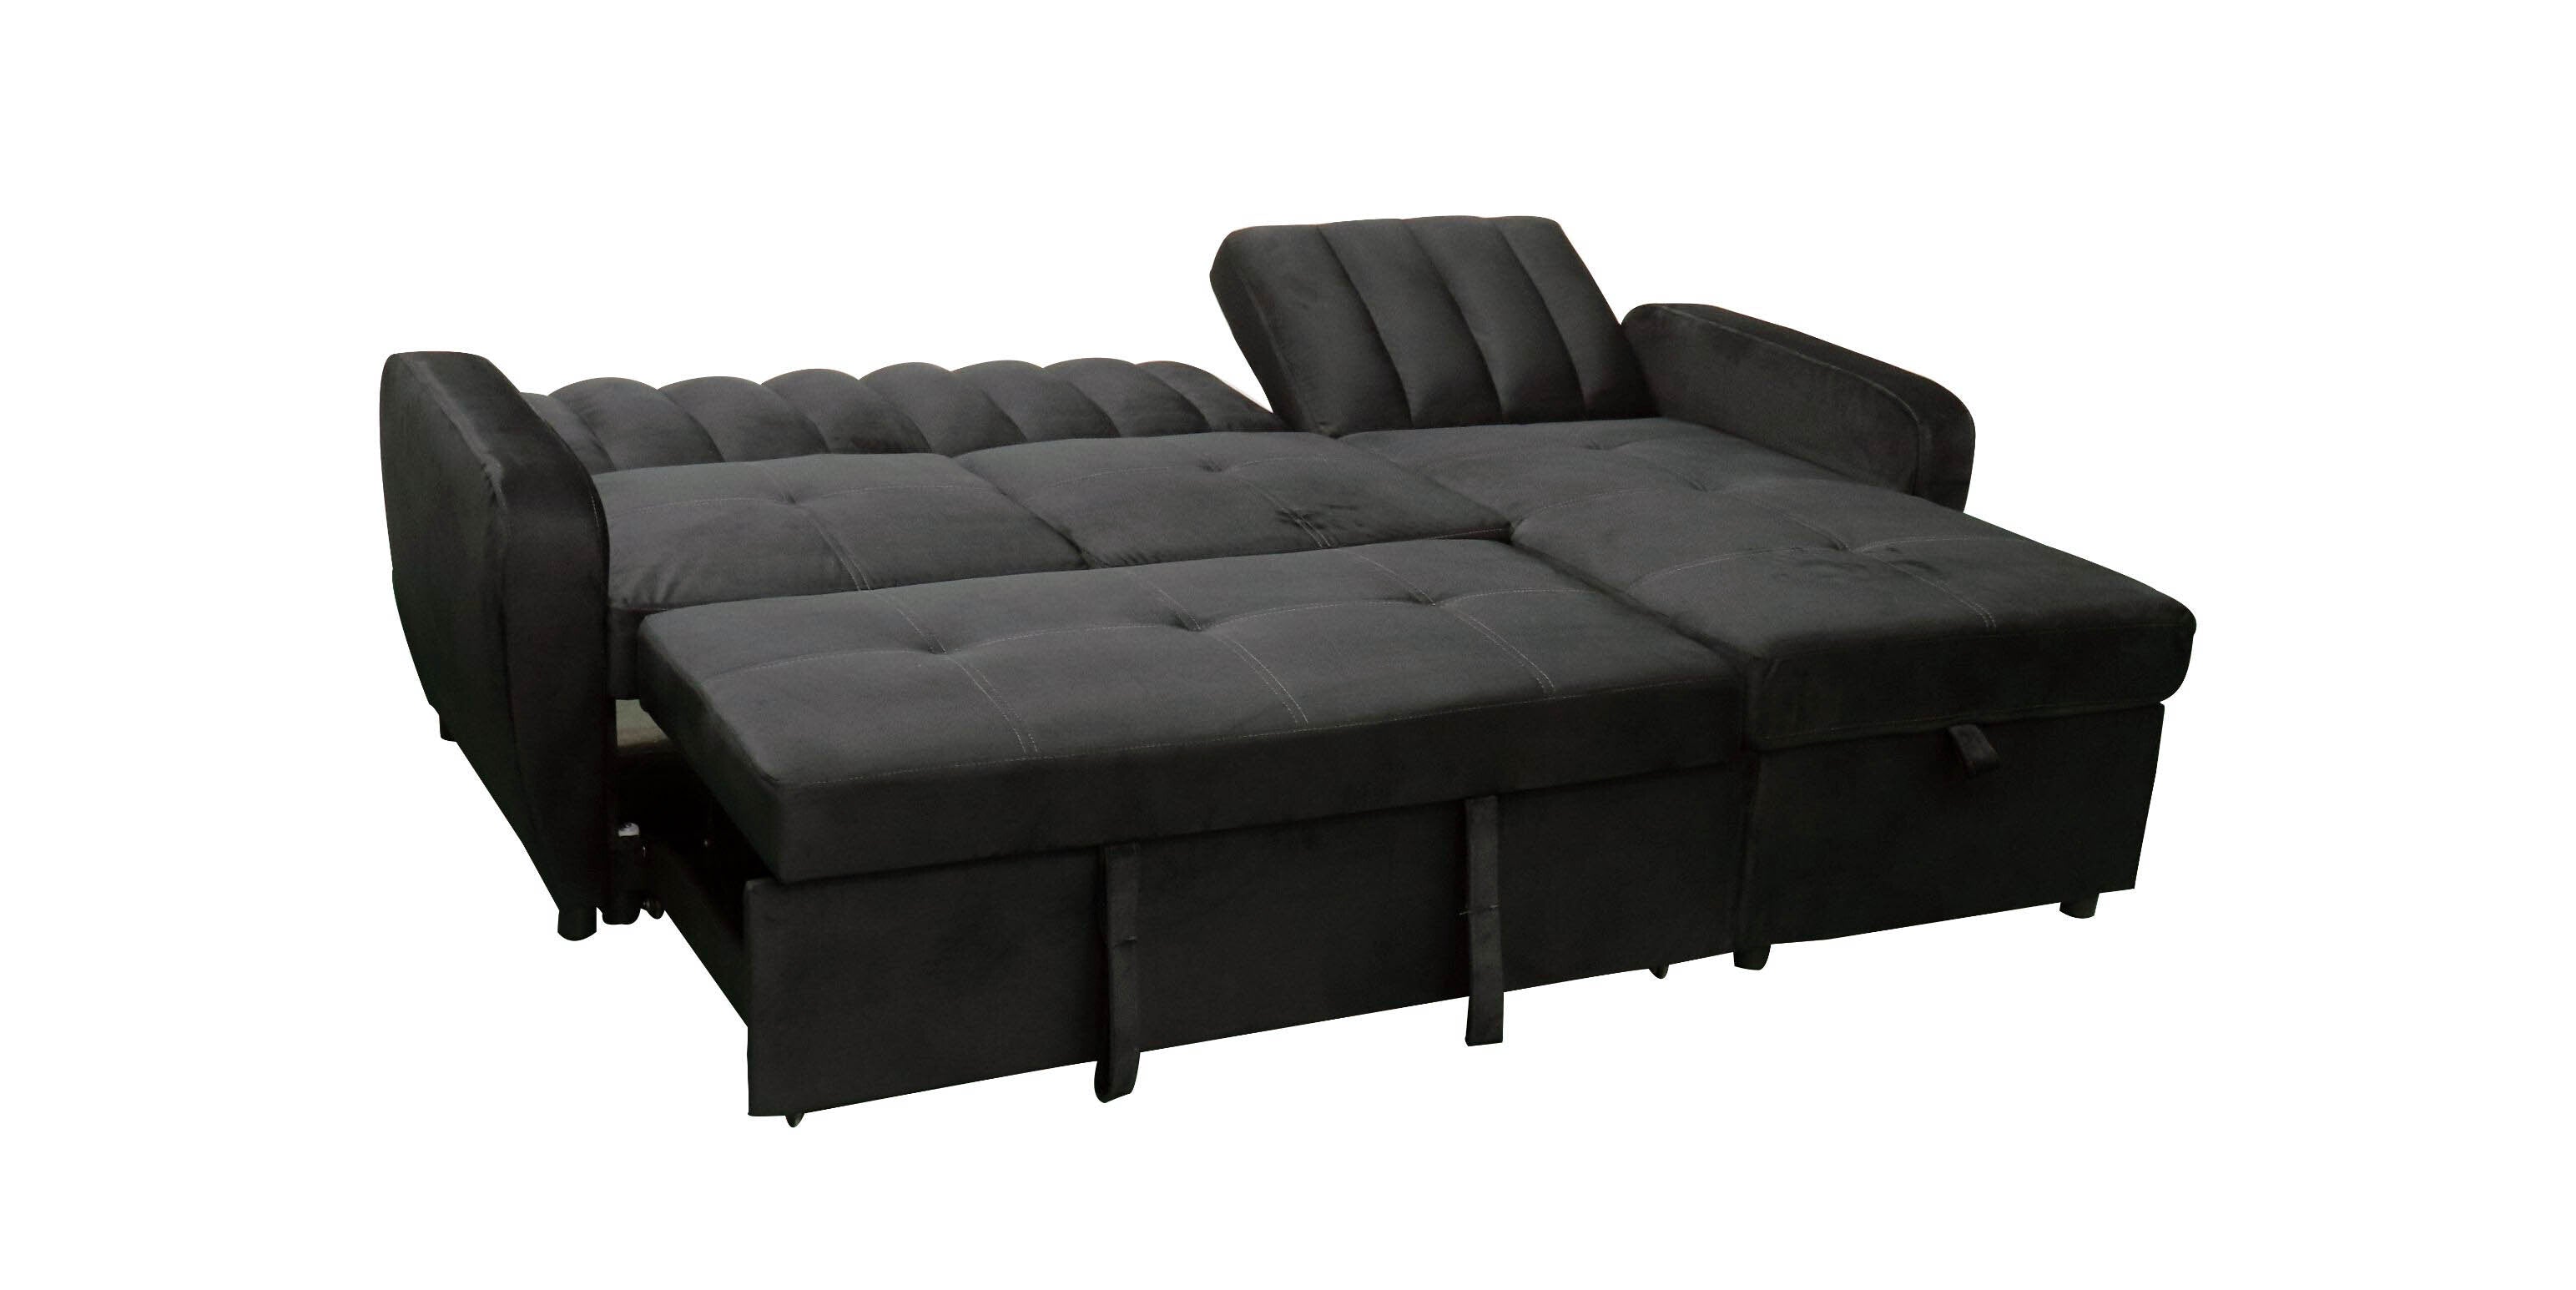 Sofa Cama Chaise Longue Rio 219x147cm